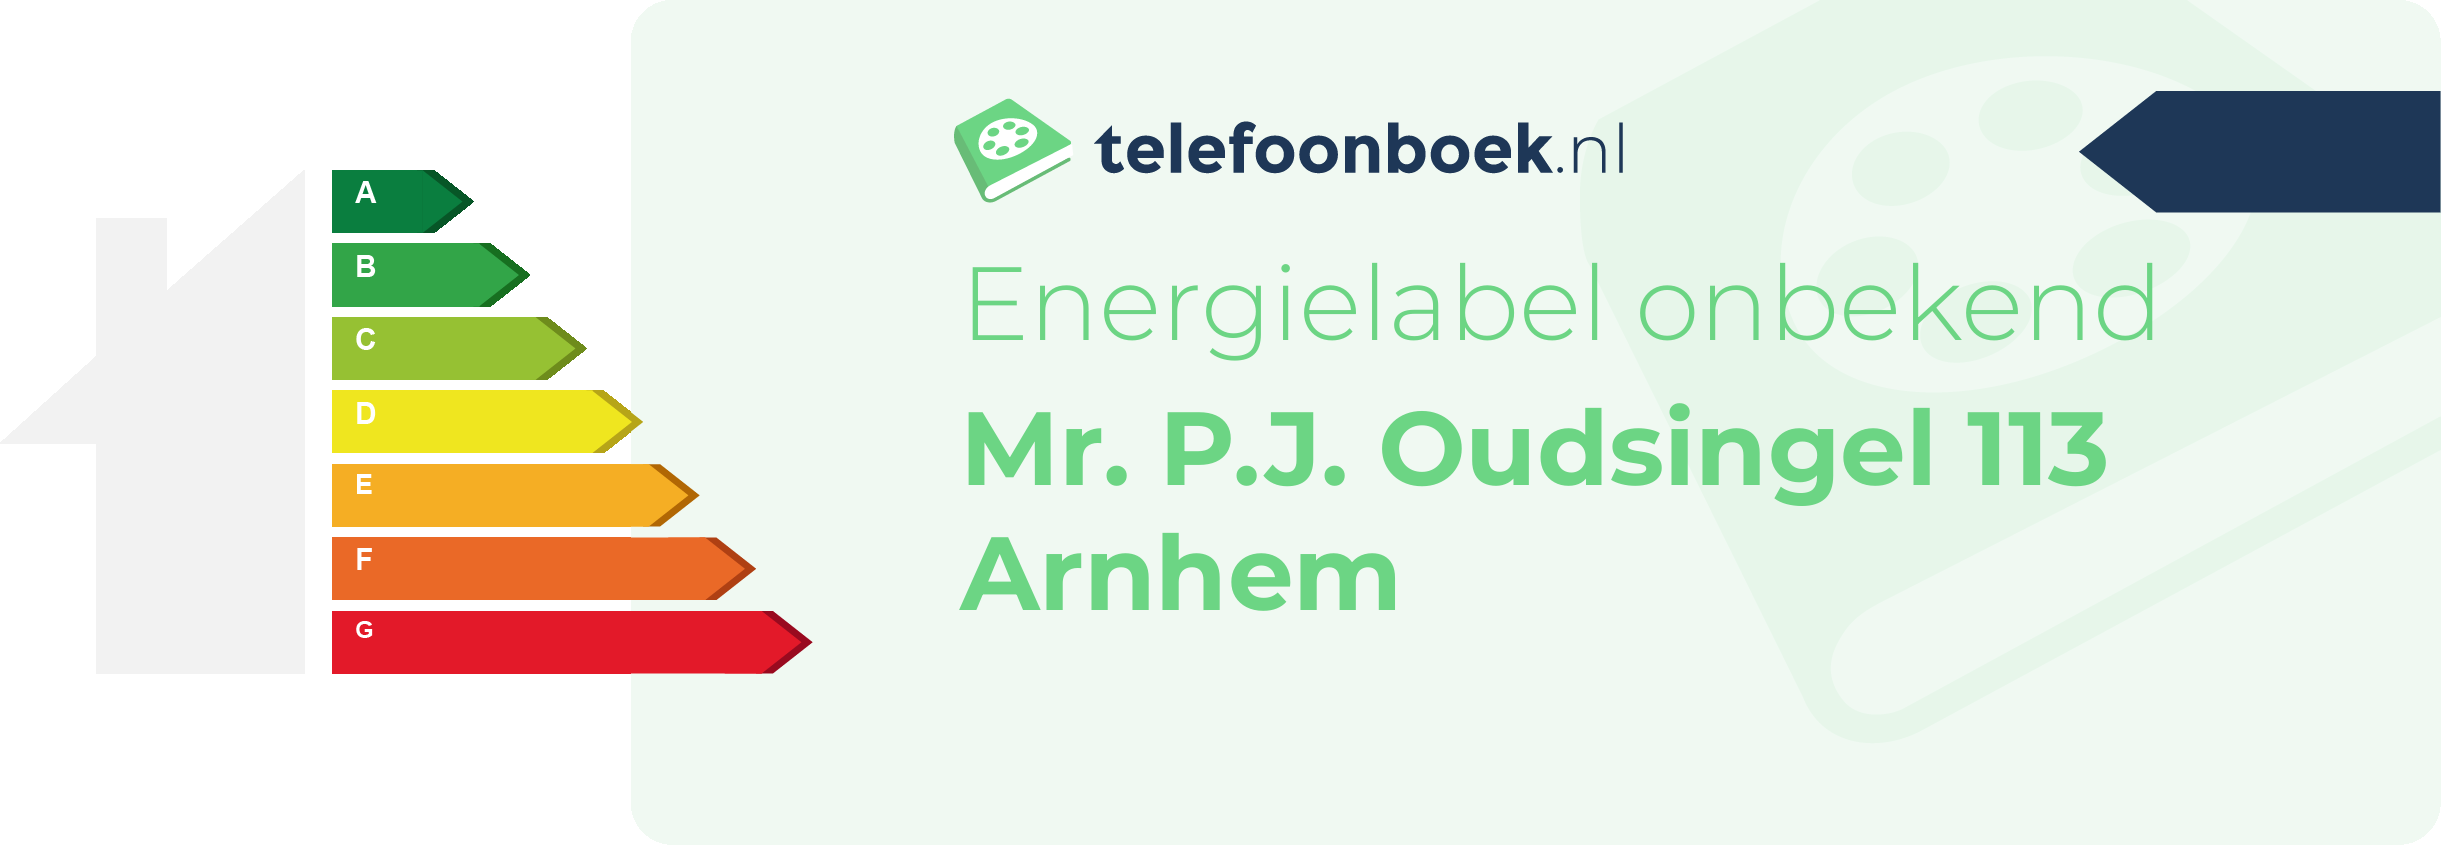 Energielabel Mr. P.J. Oudsingel 113 Arnhem